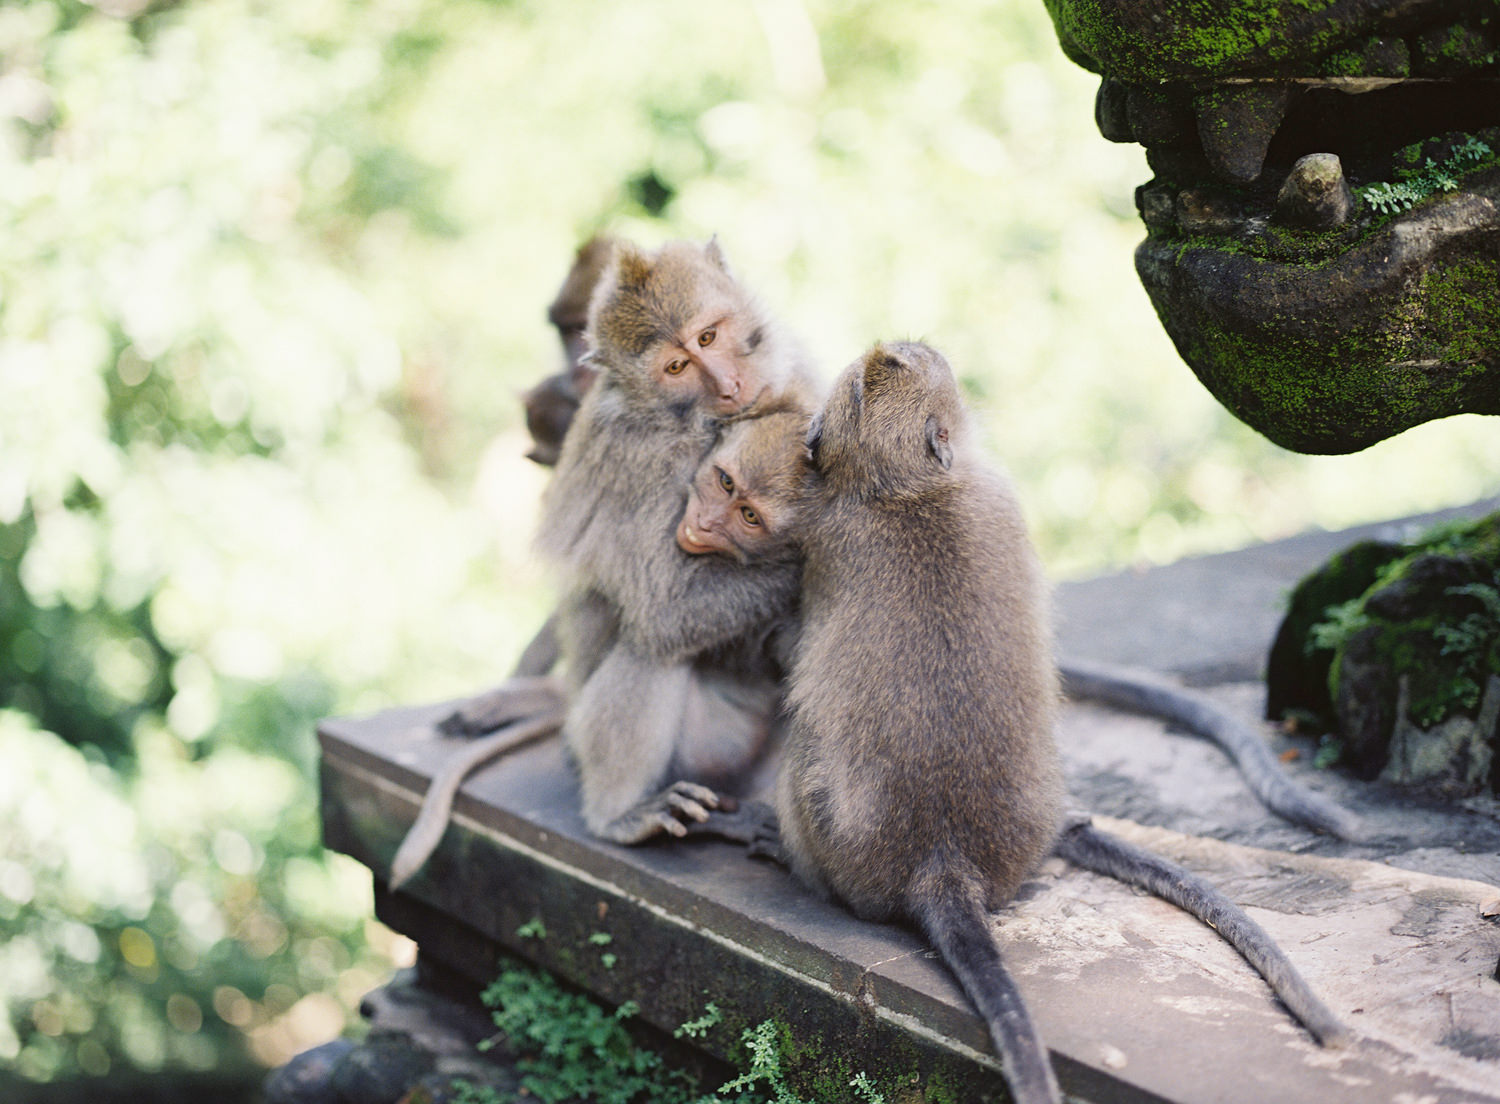 monkeys having fun together in ubud